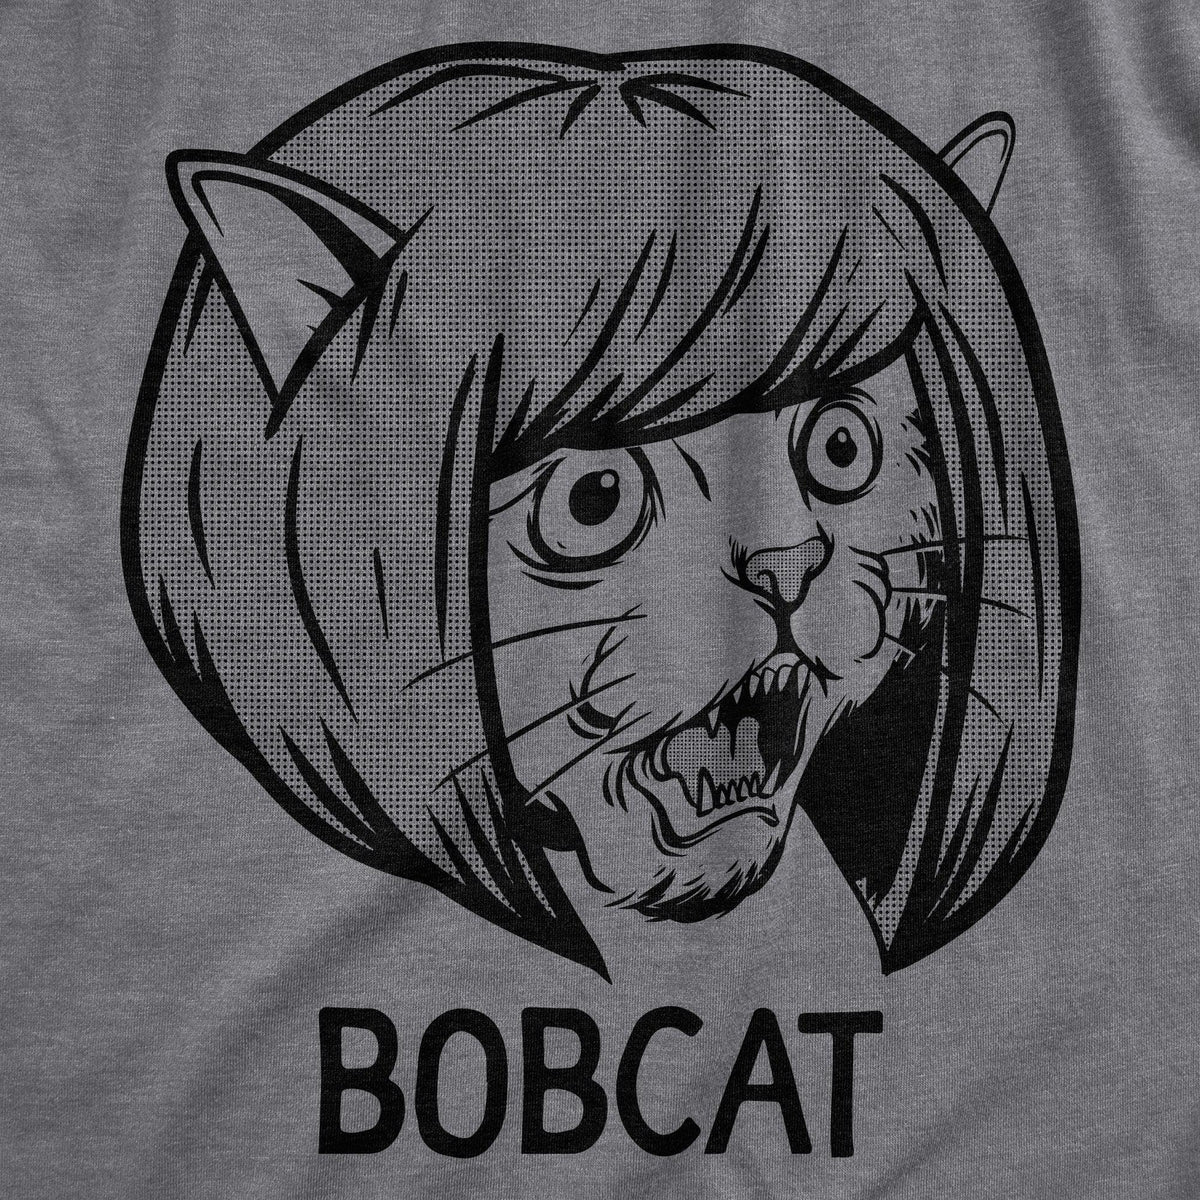 Bobcat Women&#39;s Tshirt  -  Crazy Dog T-Shirts